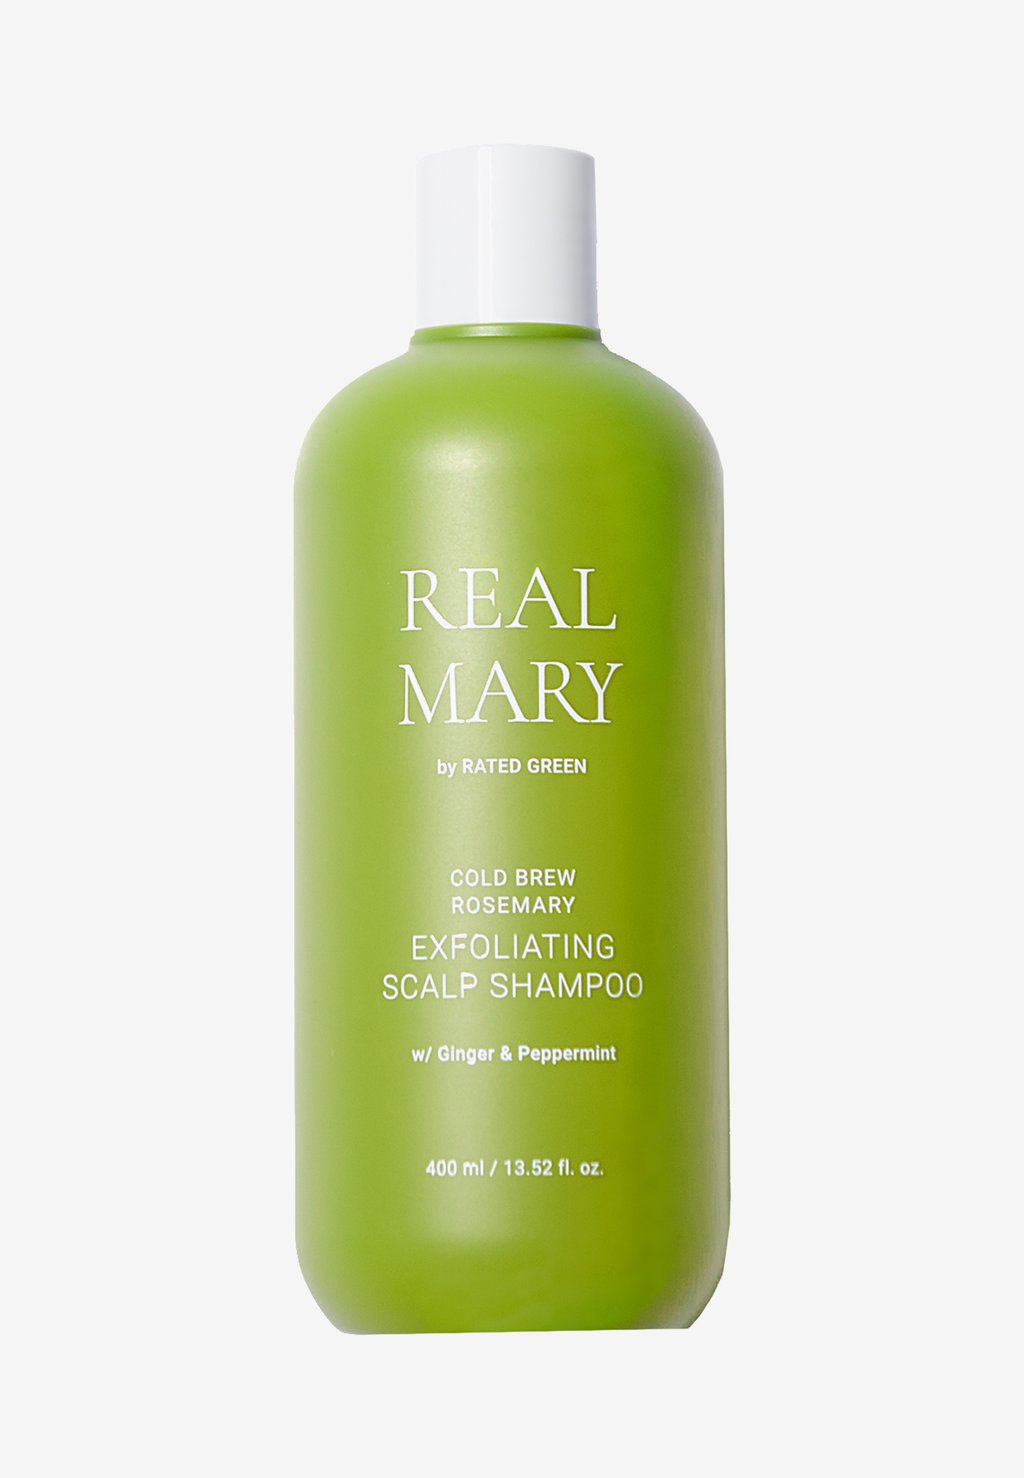 Шампунь Real Mary Exfoliating Scalp Shampoo RATED GREEN шампунь для волос rated green глубоко очищающий и отшелушивающий шампунь с соком розмарина real mary exfoliating scalp shampoo